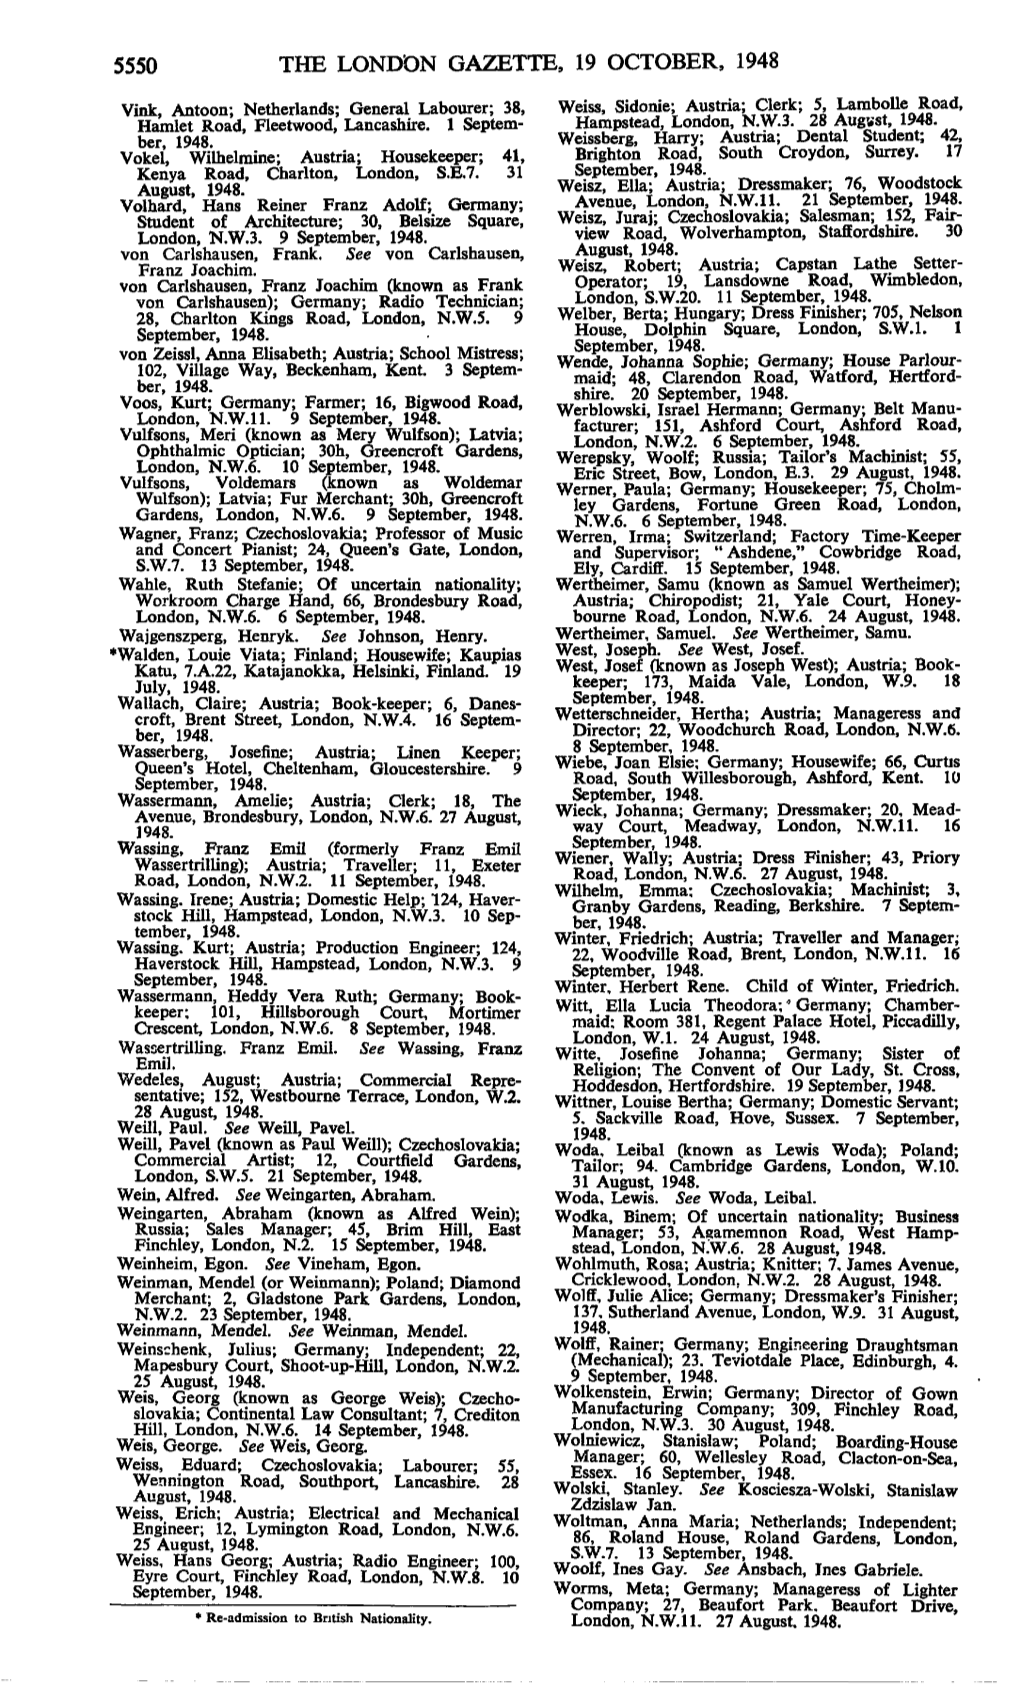 5550 the London Gazette, 19 October, 1948